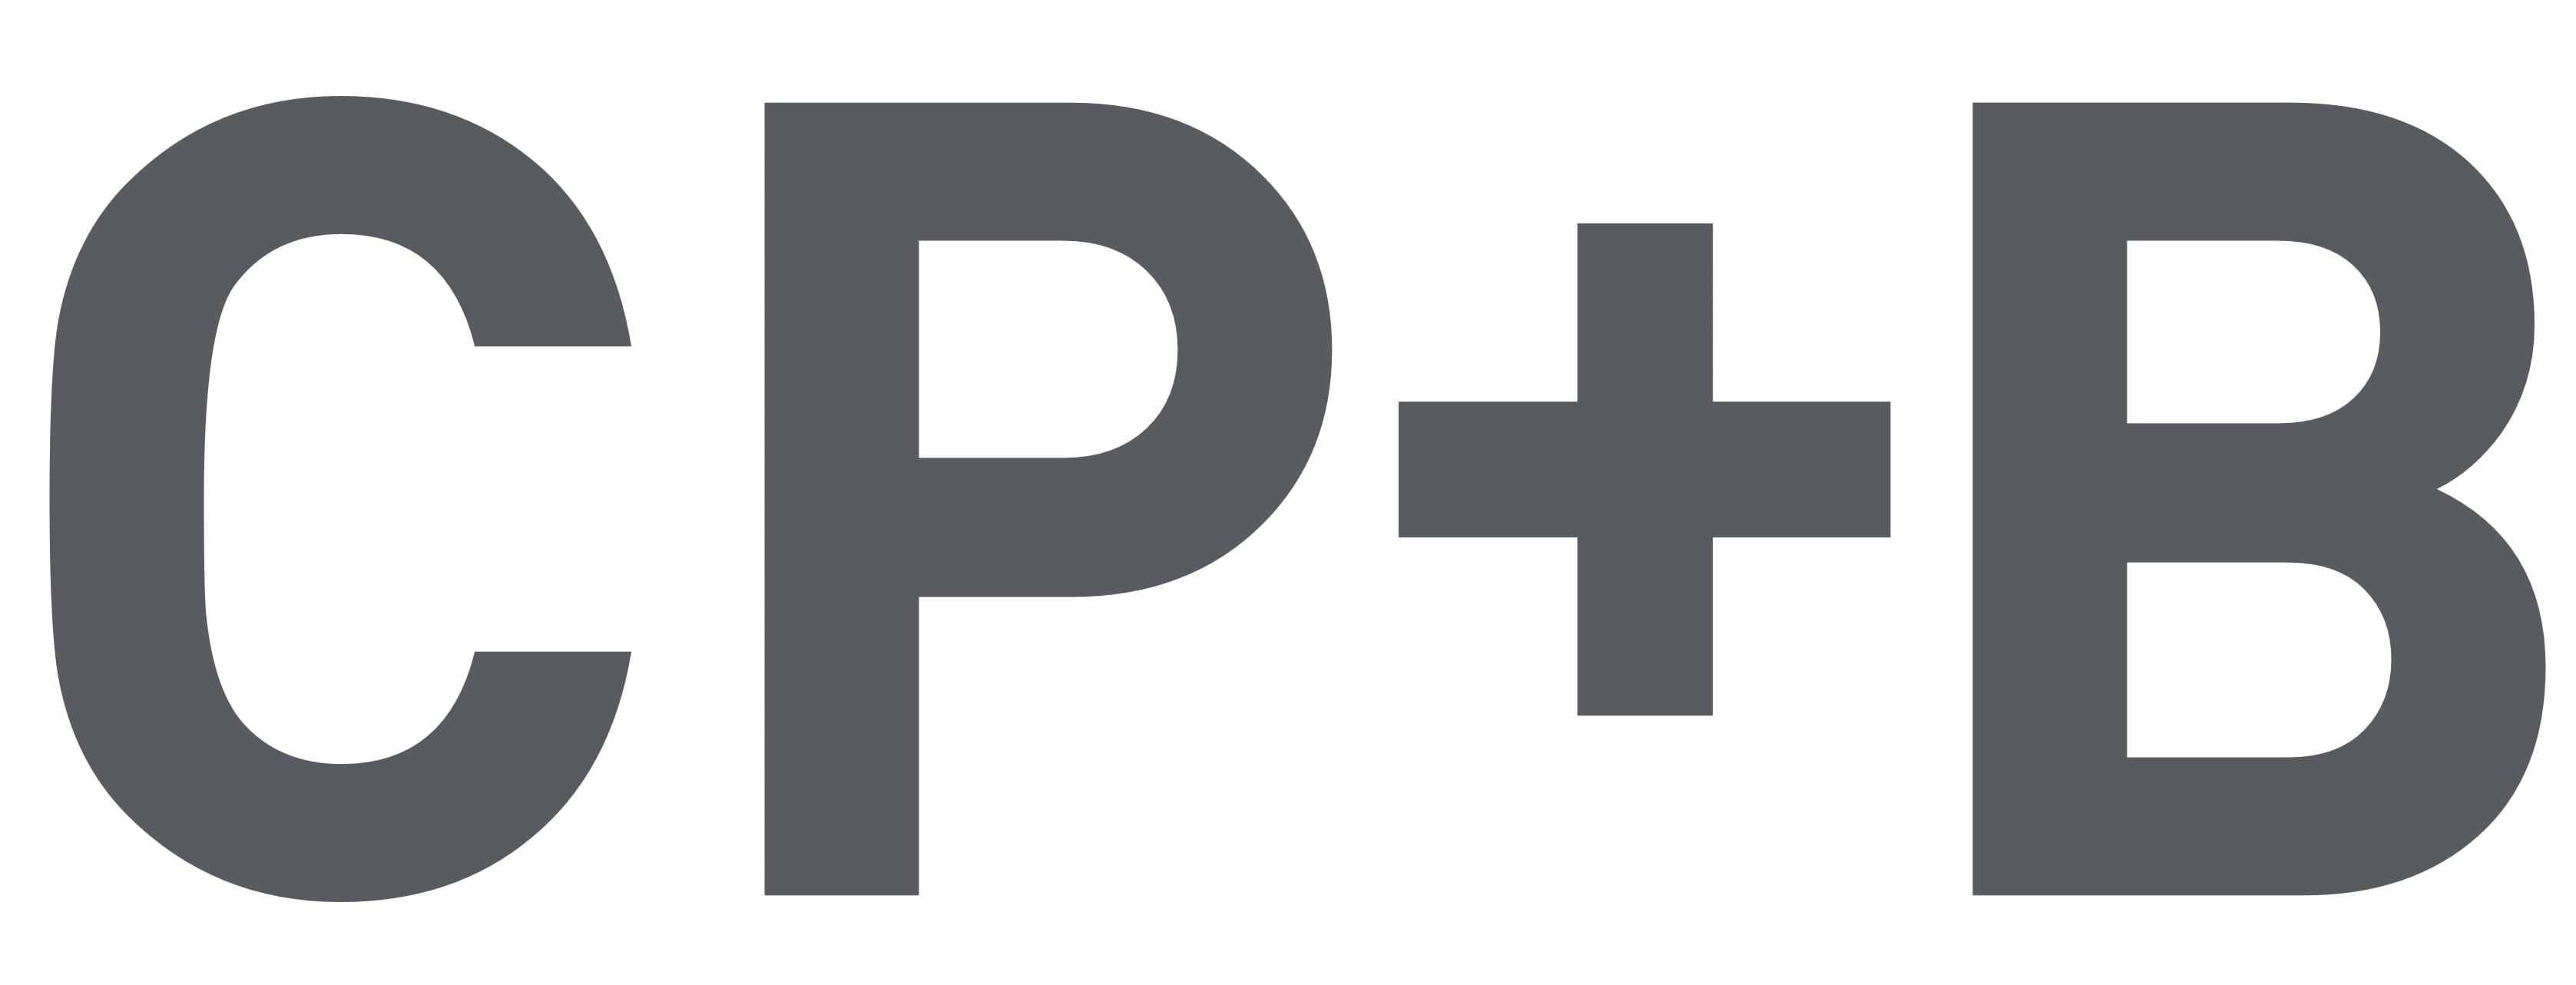 CPB_Crispin_PorterBogusky Logo